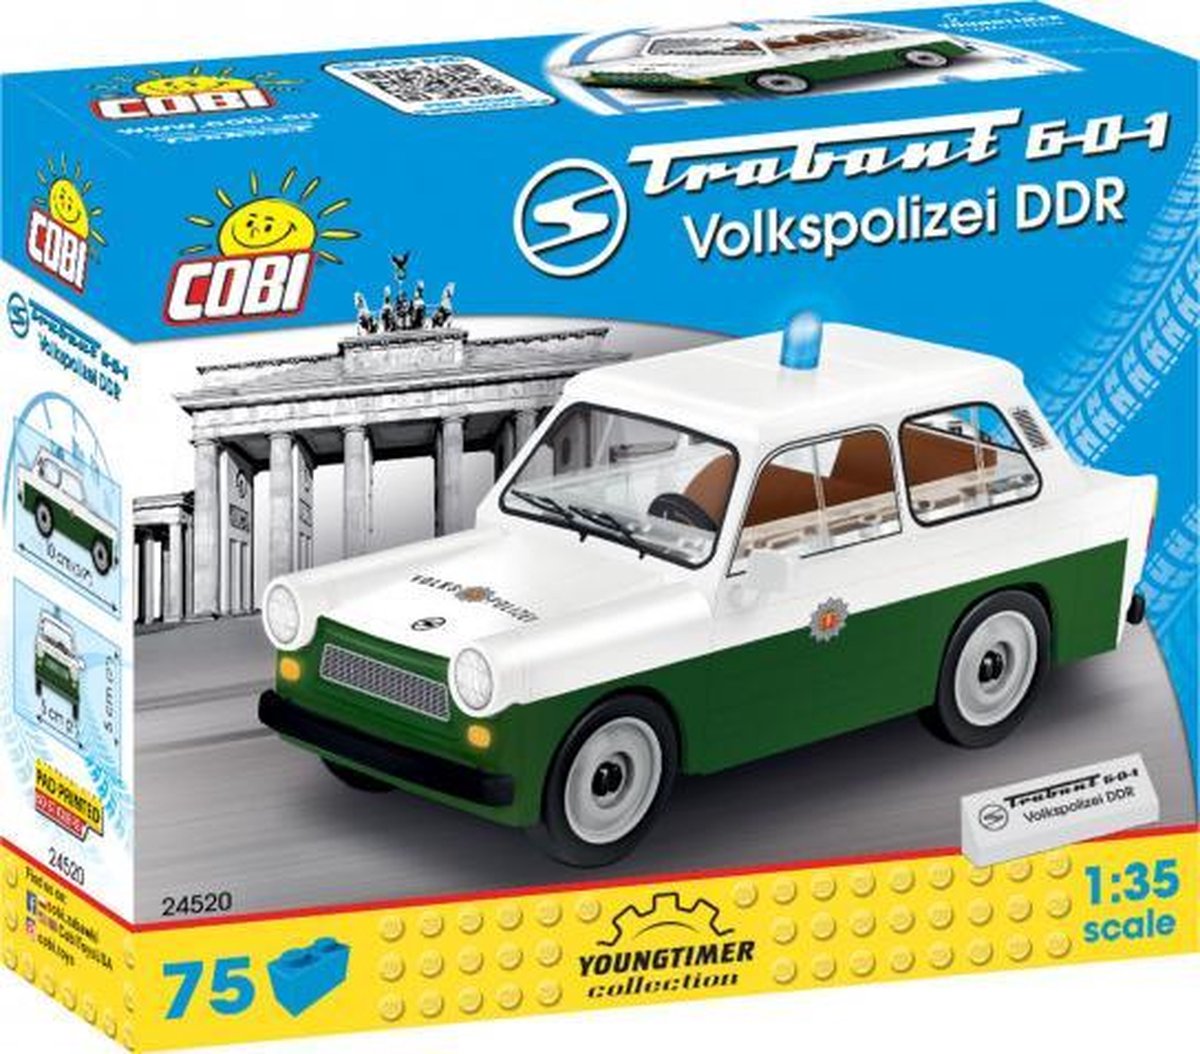 bouwpakket Trabant 601 Volkspolizei DDR 75-delig (24520)